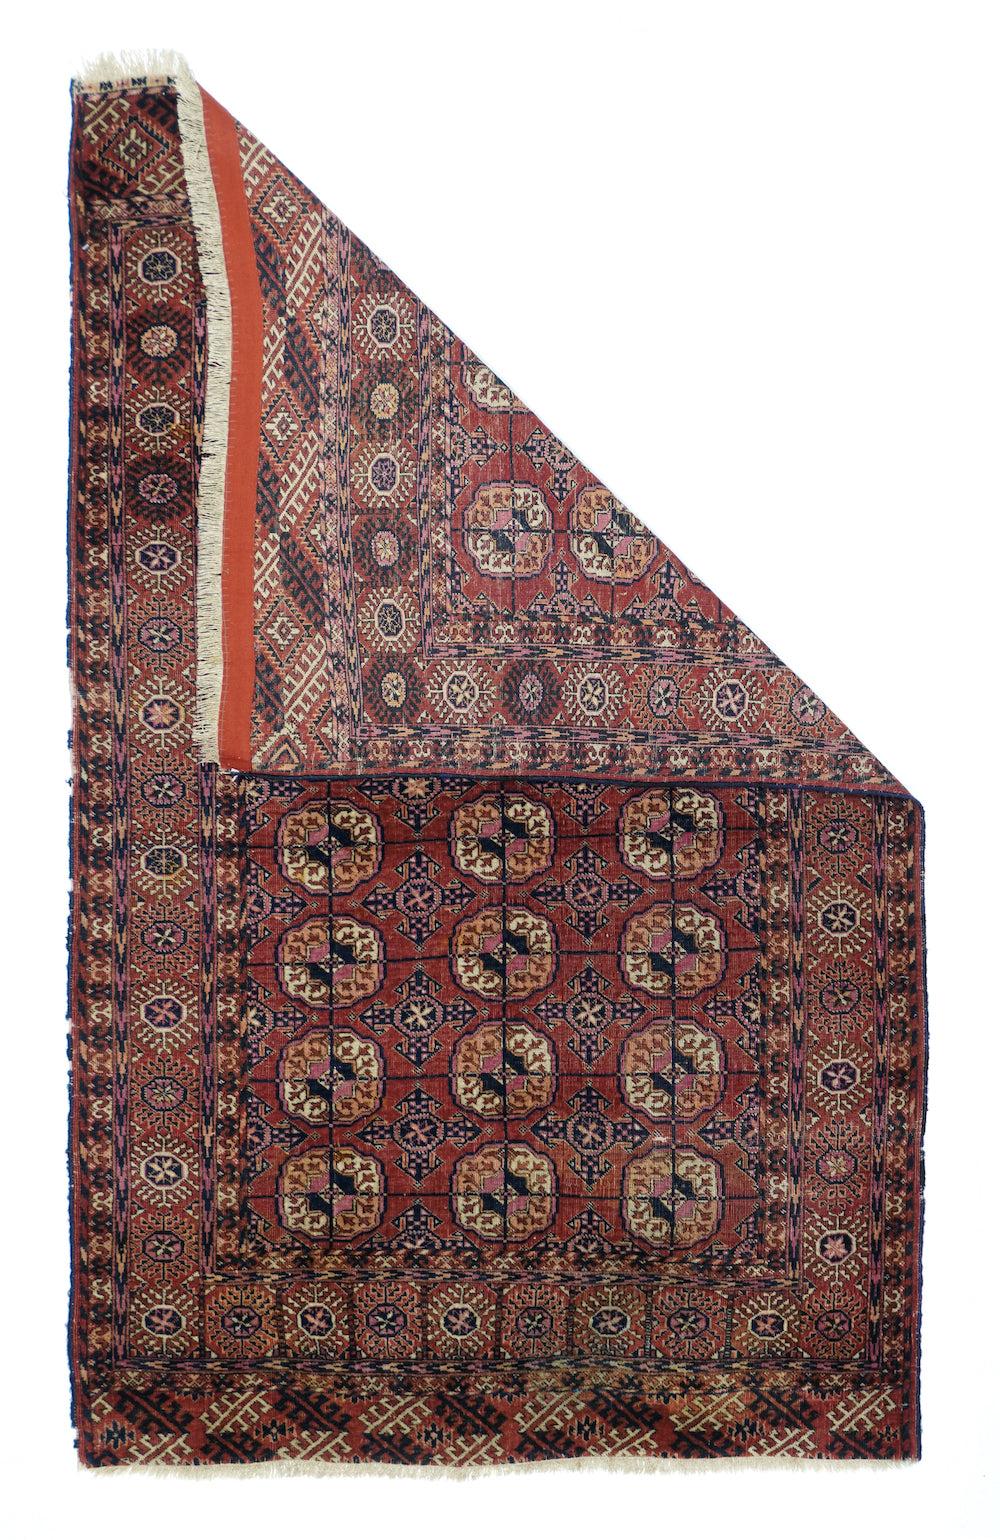 Antique Turkaman rug measures 3'8'' x 5'10''.